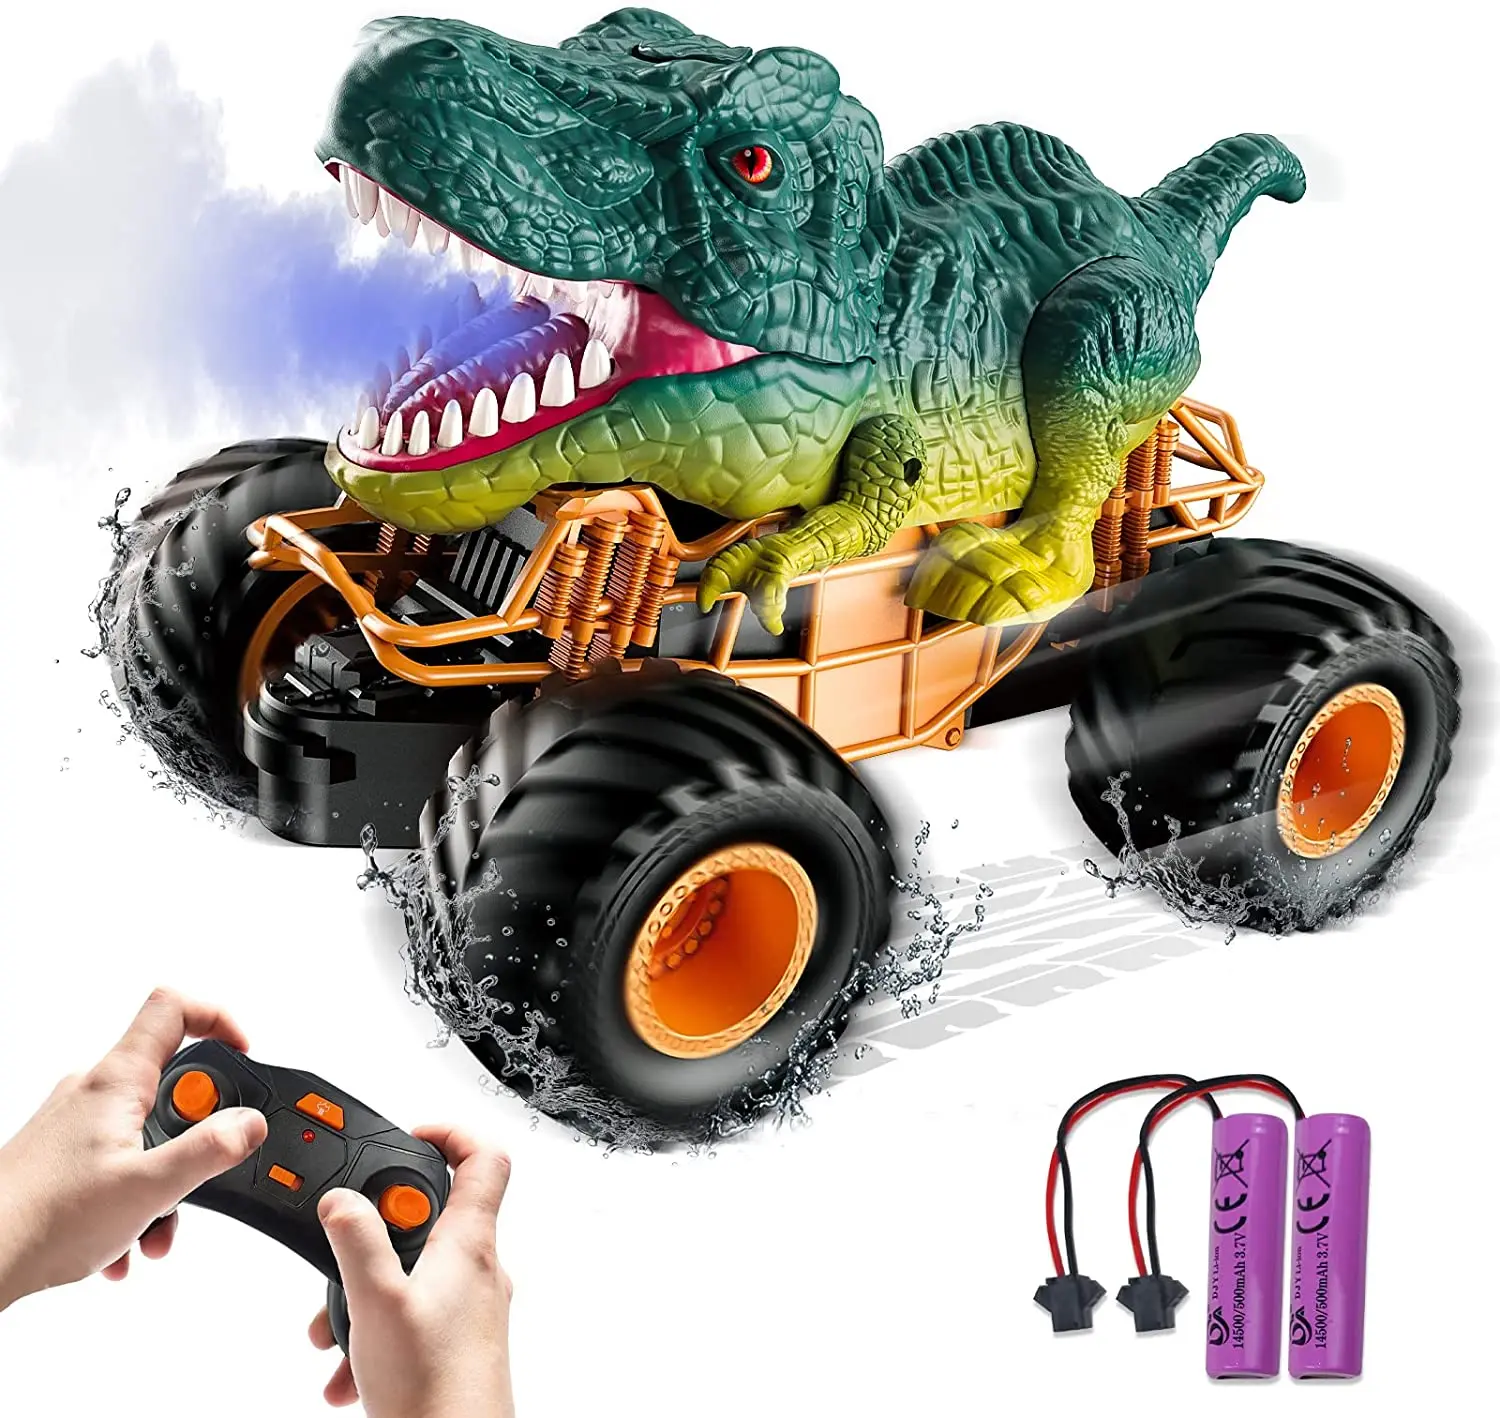 

Remote Control Dinosaur Car RC Toys Spray Off-Road Climbing Vehicle Tyrannosaurus Rex Triceratops Animal Kids Children Gift